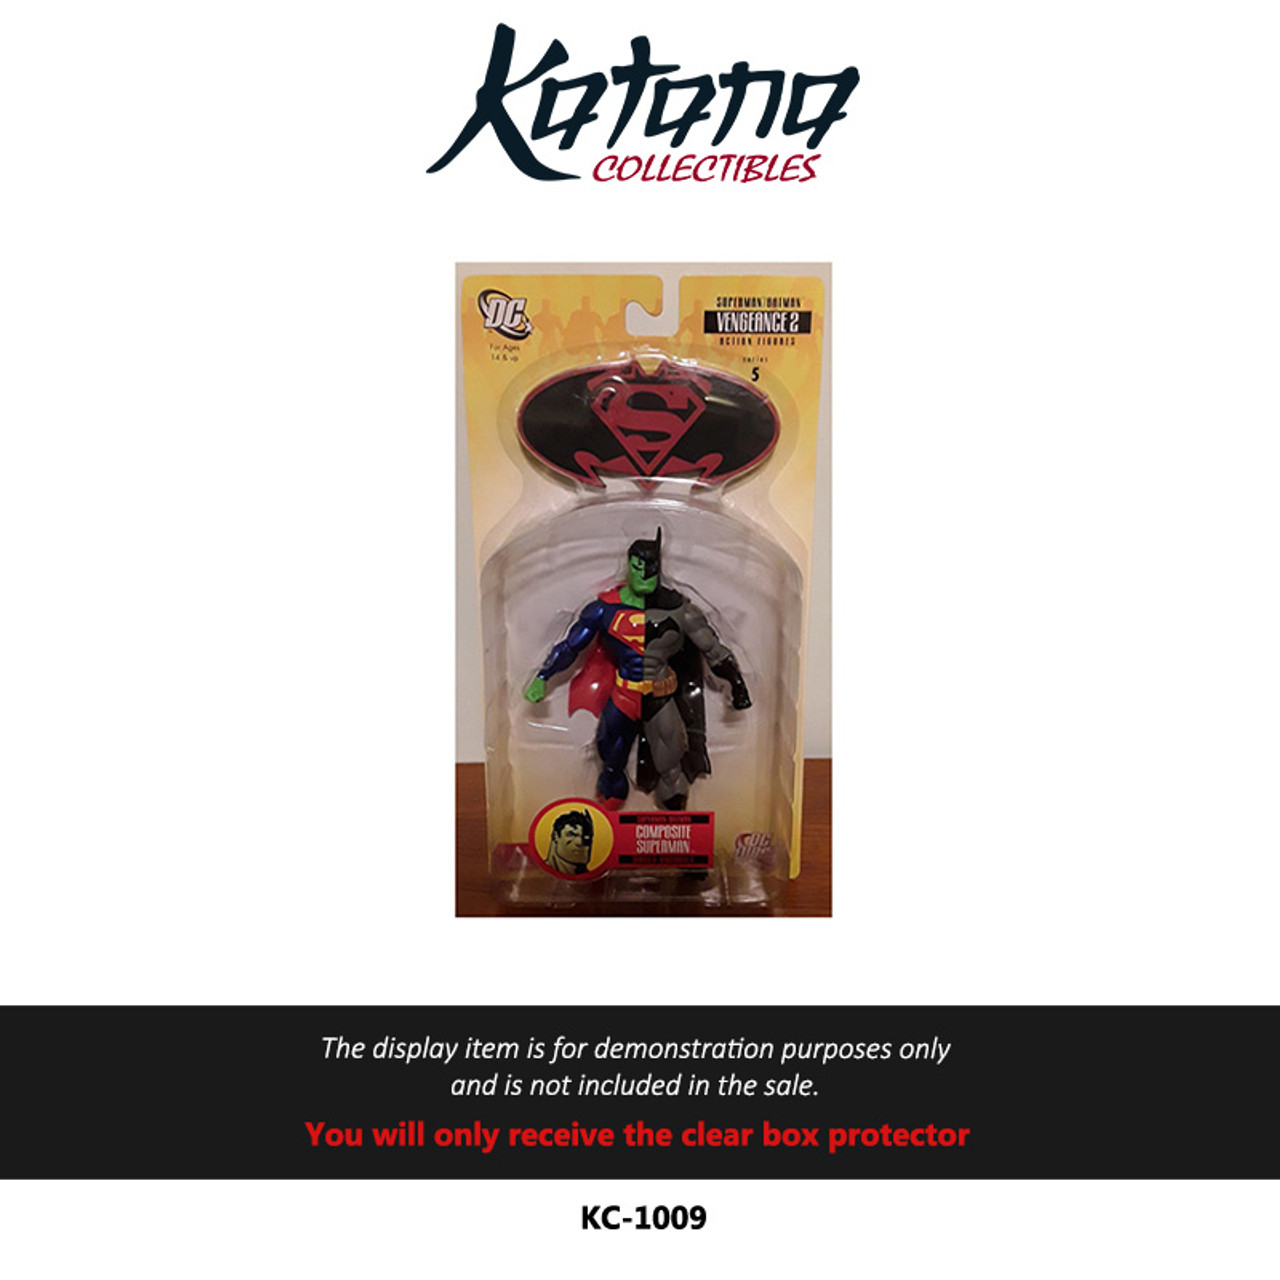 Katana Collectibles Protector For DC Direct Composite Superman